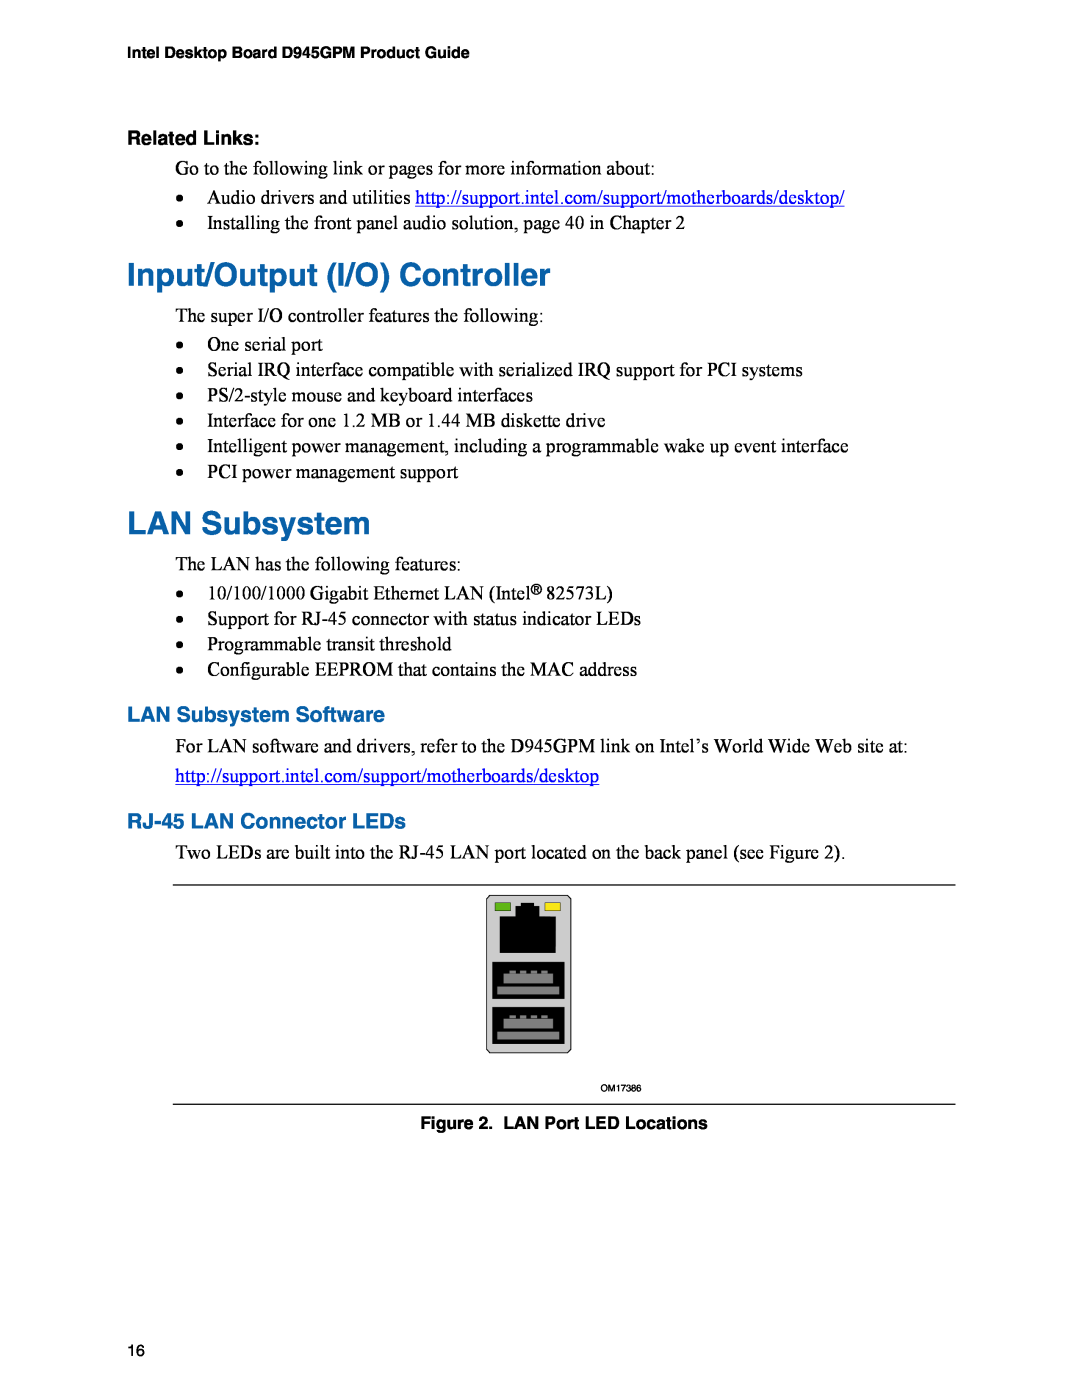 Intel D945GPM manual Input/Output I/O Controller, LAN Subsystem Software, RJ-45 LAN Connector LEDs, Related Links 